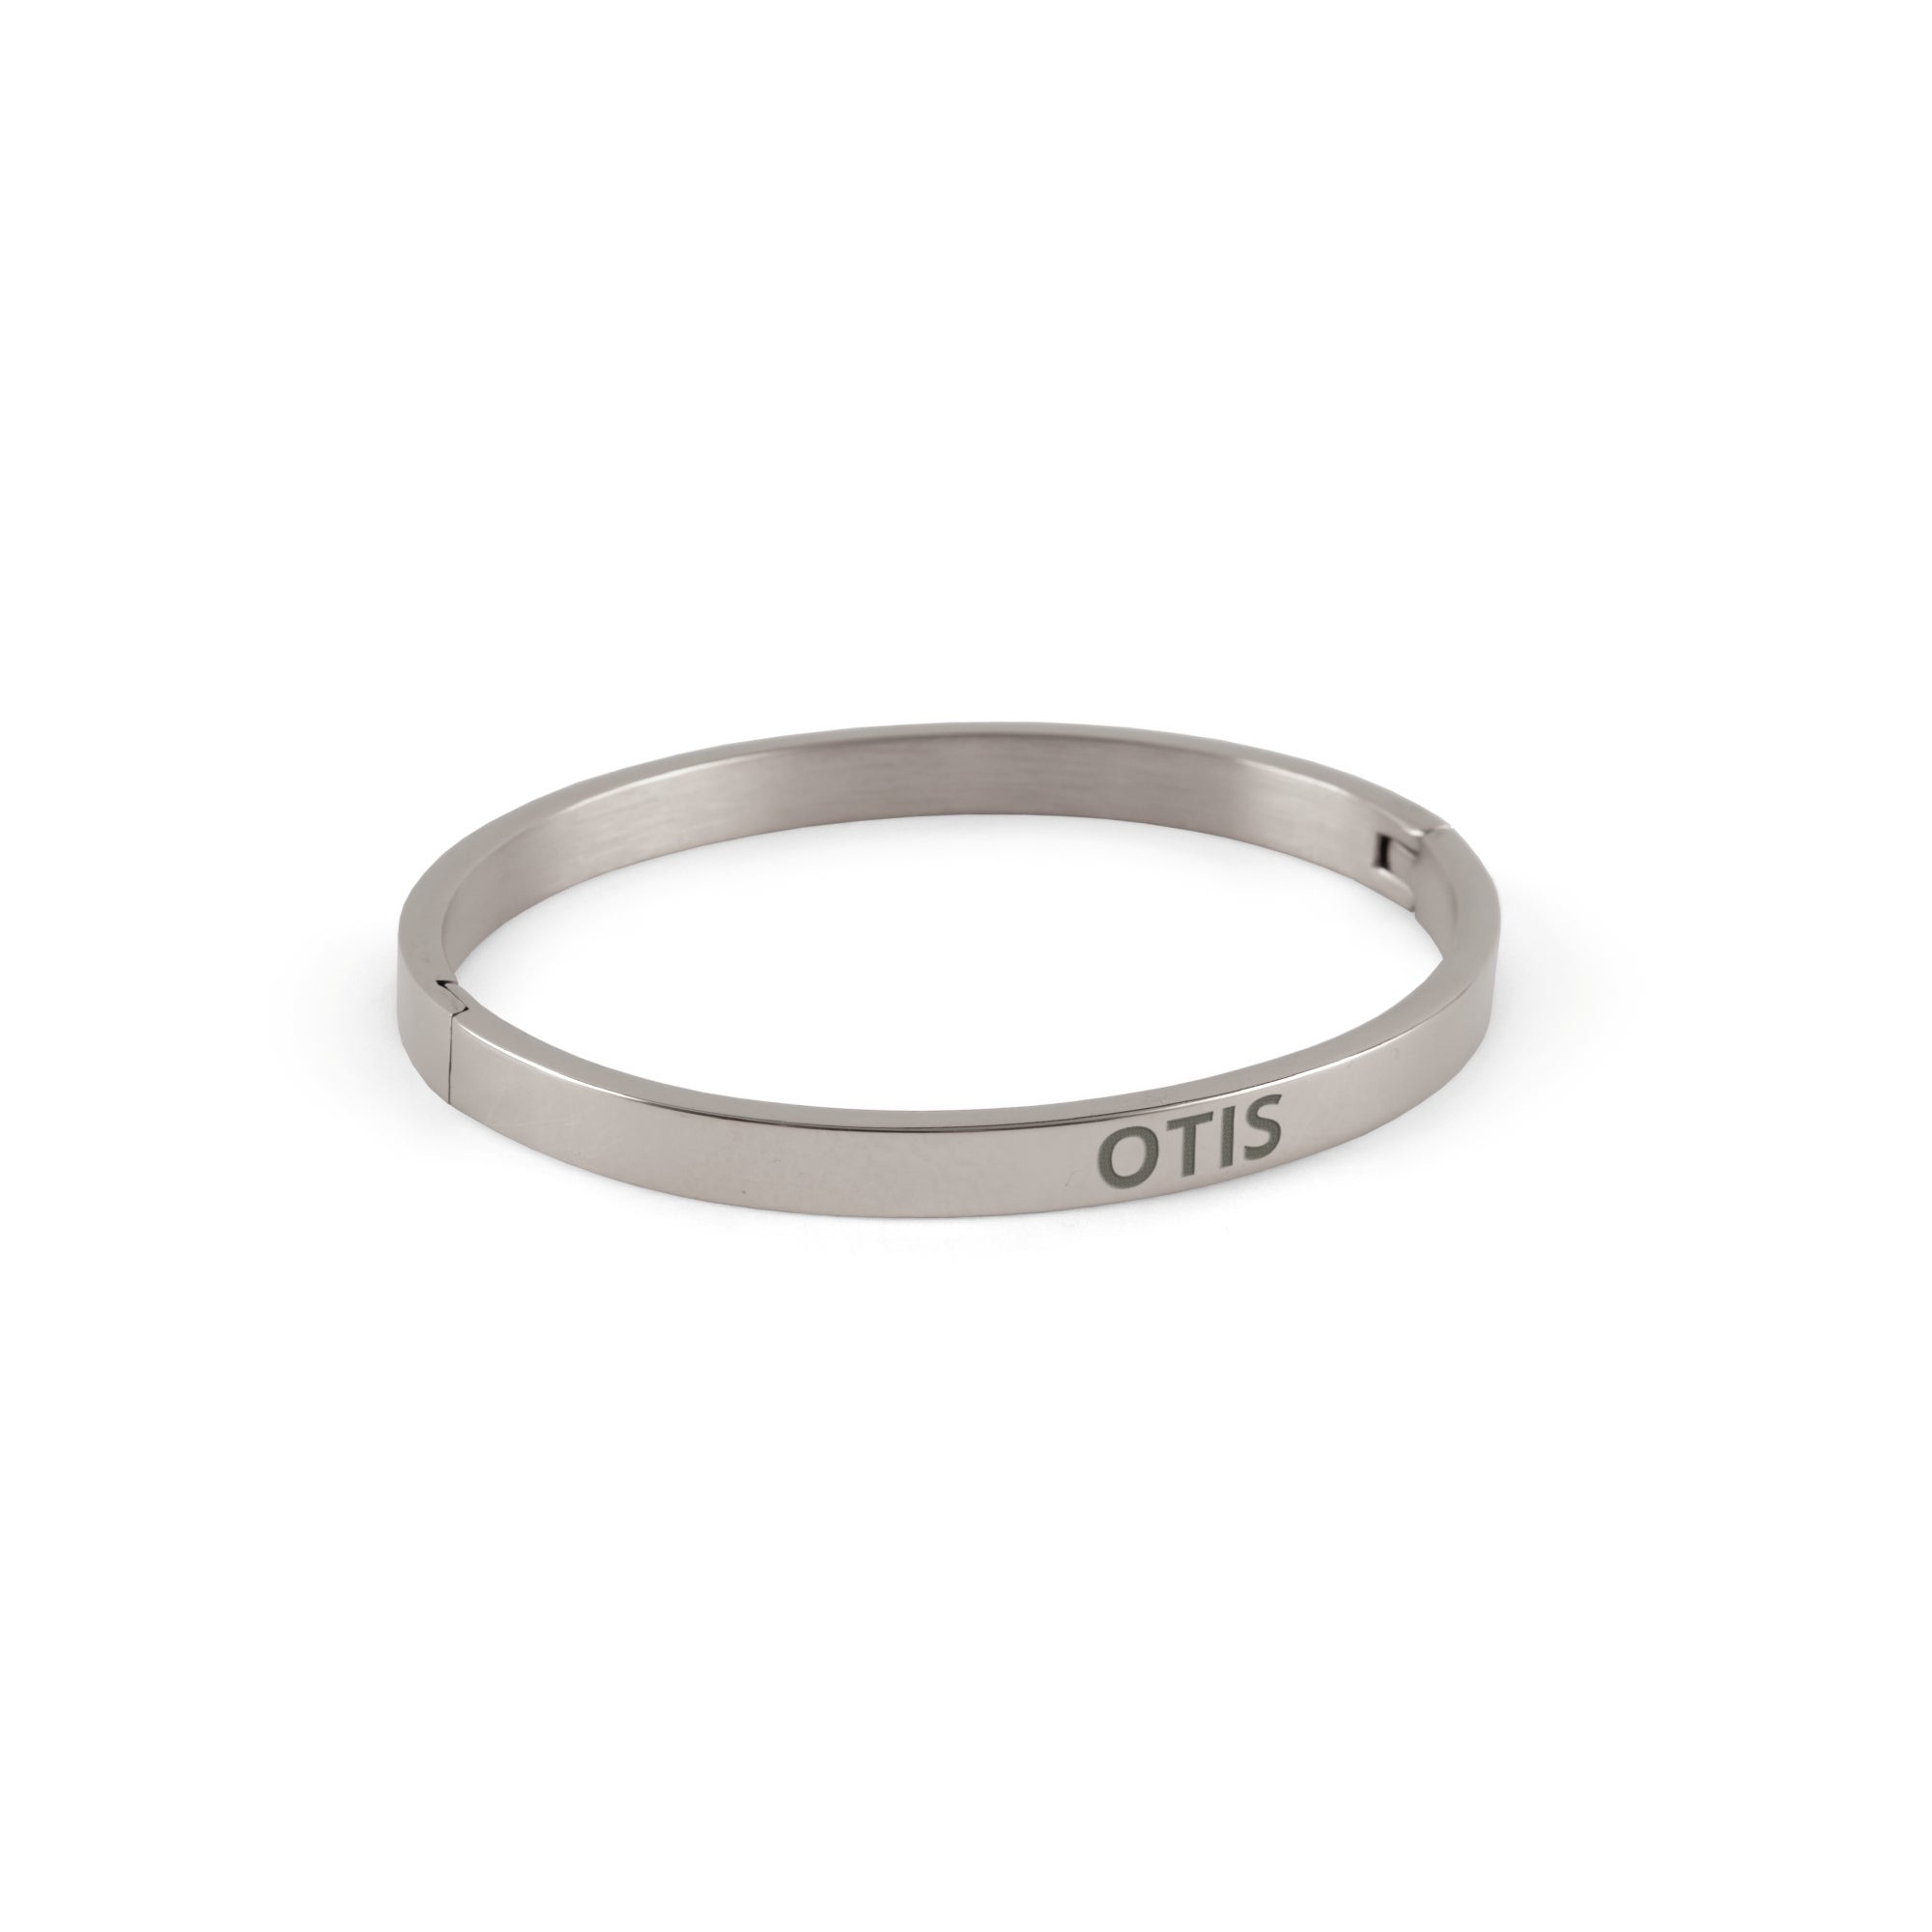 Personalised bangle bracelet - Silver colour